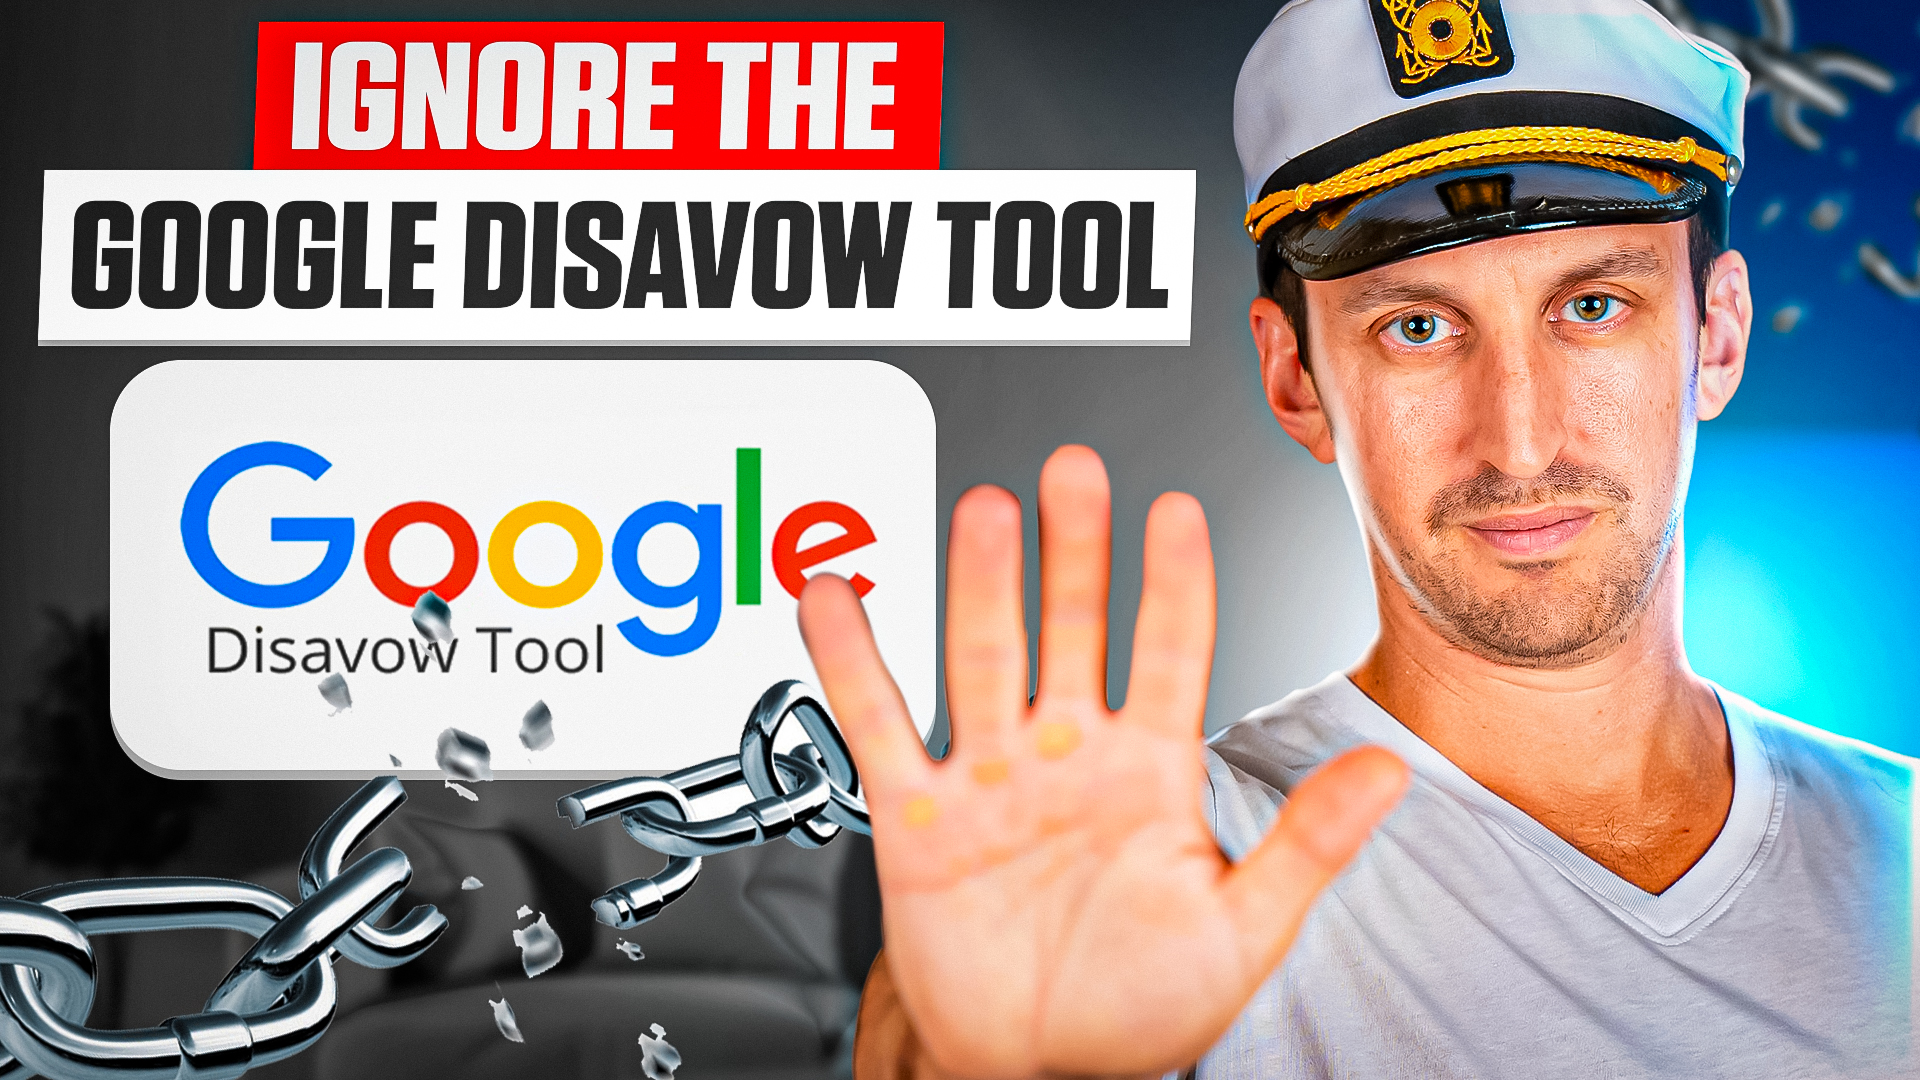 google-disavow-tool-is-irrelevant